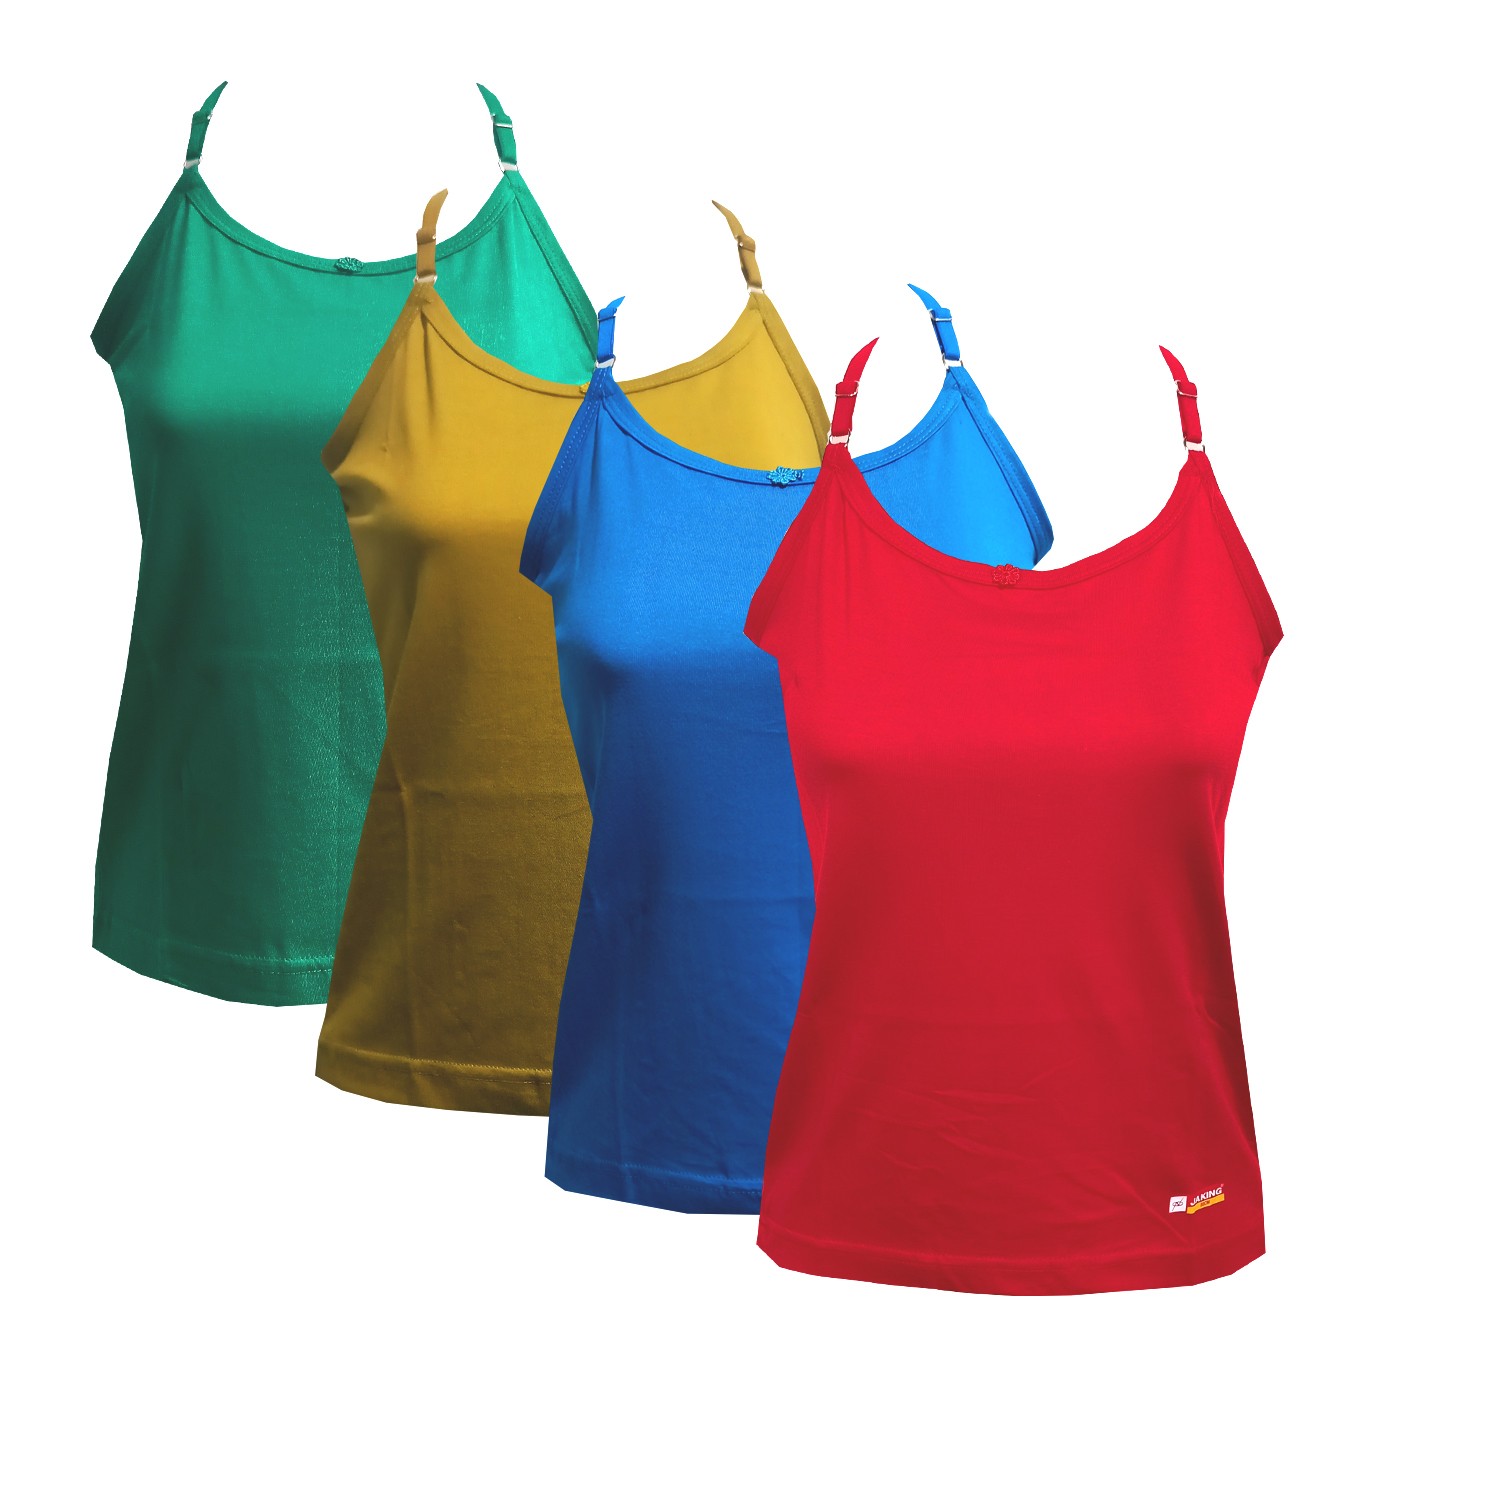 Slips For Women Camisole Cotton Multicolor Pack of 4 Adjustable Elastic Slip